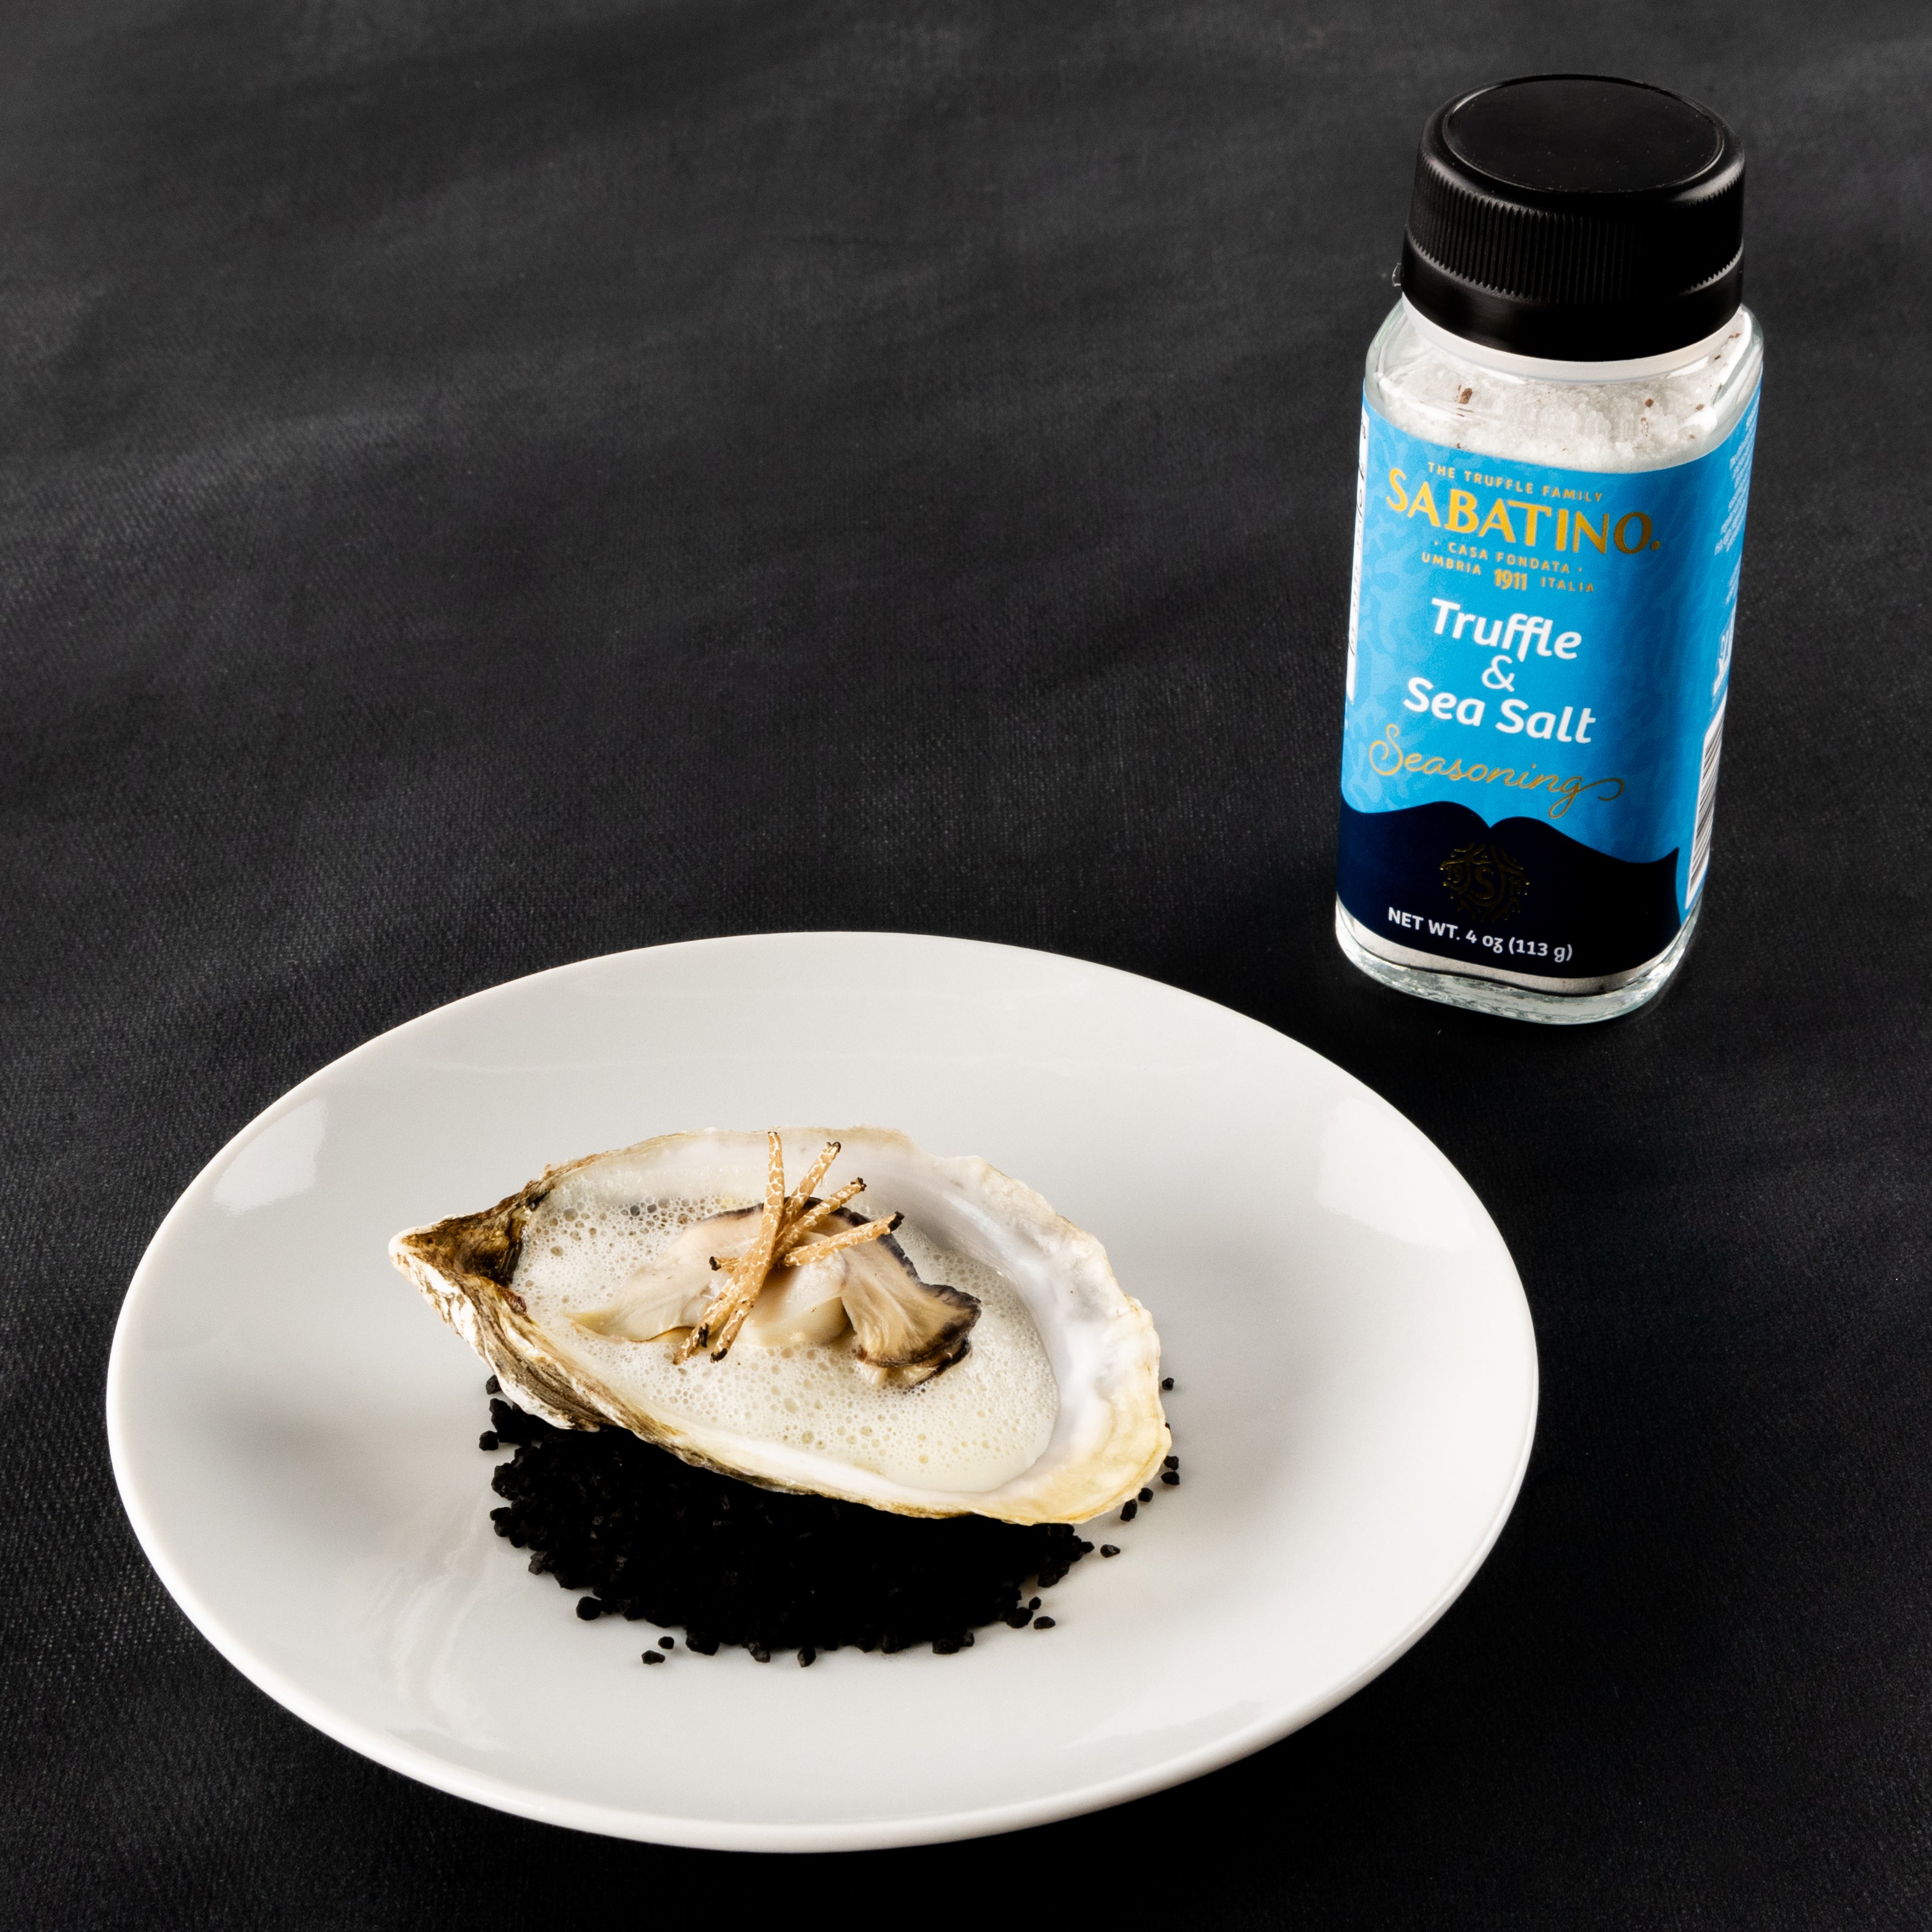 Truffle Sea Salt - 4.0 oz